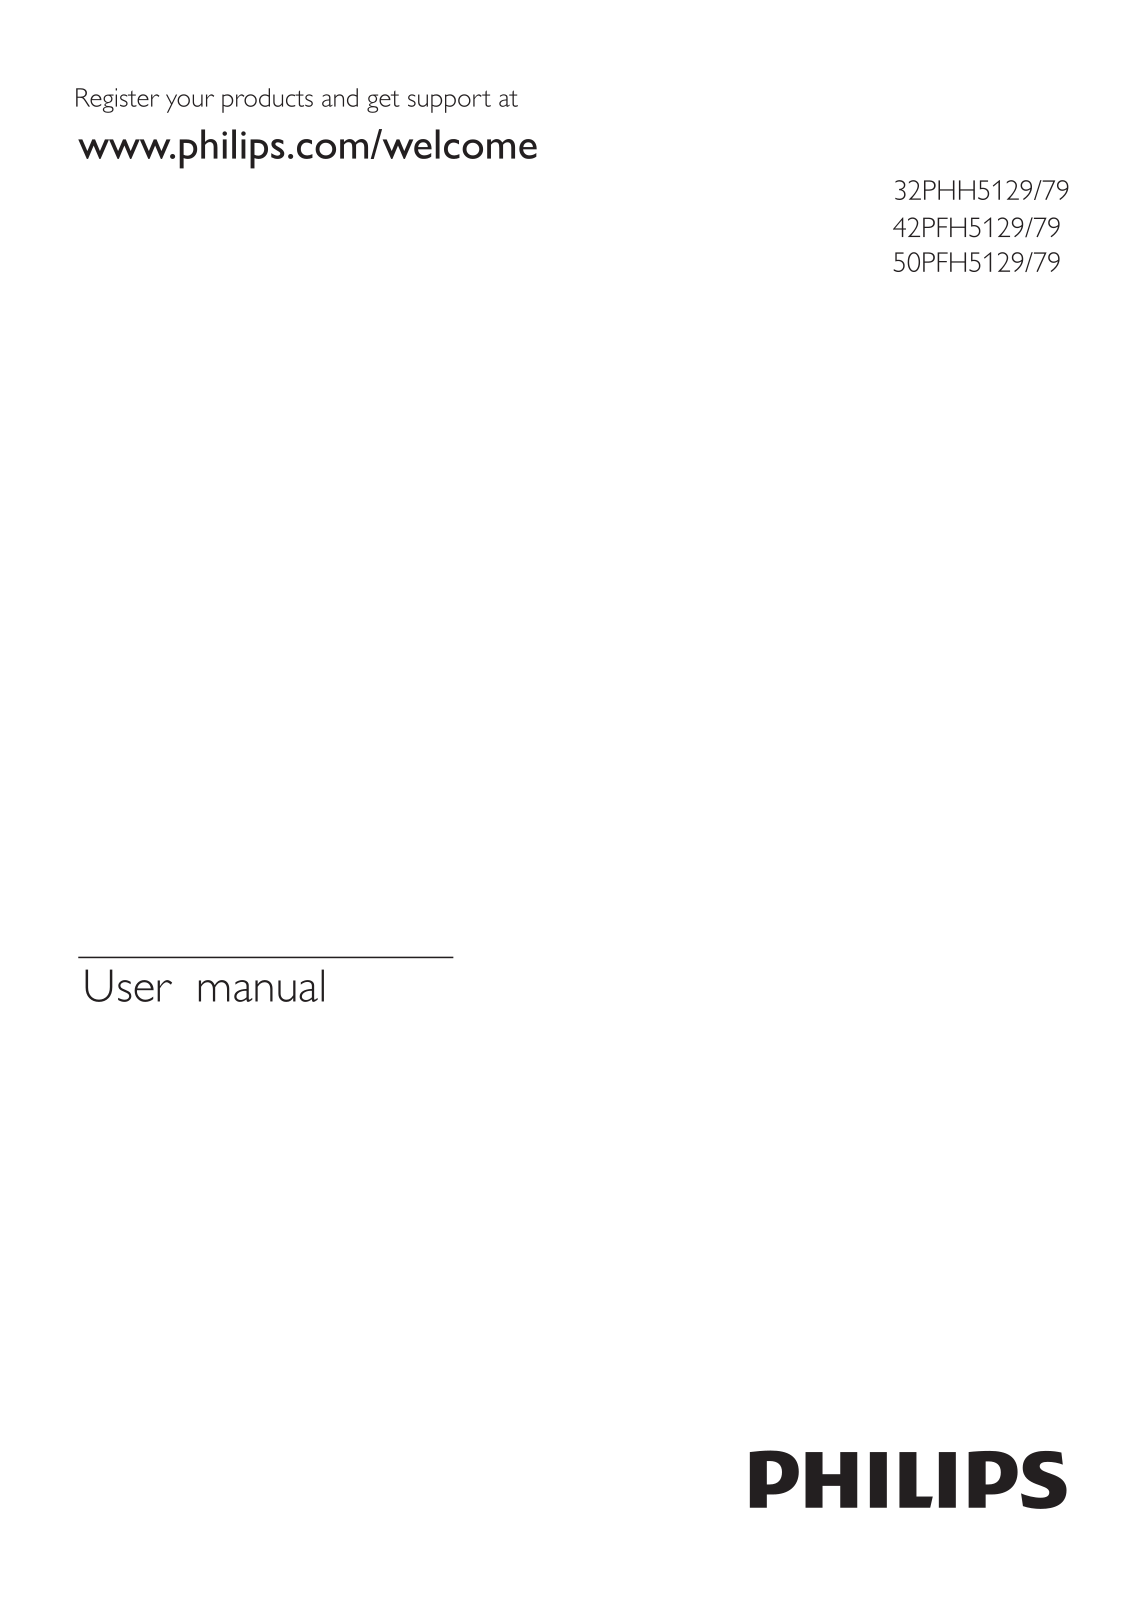 Philips PSH5129/79 User Manual